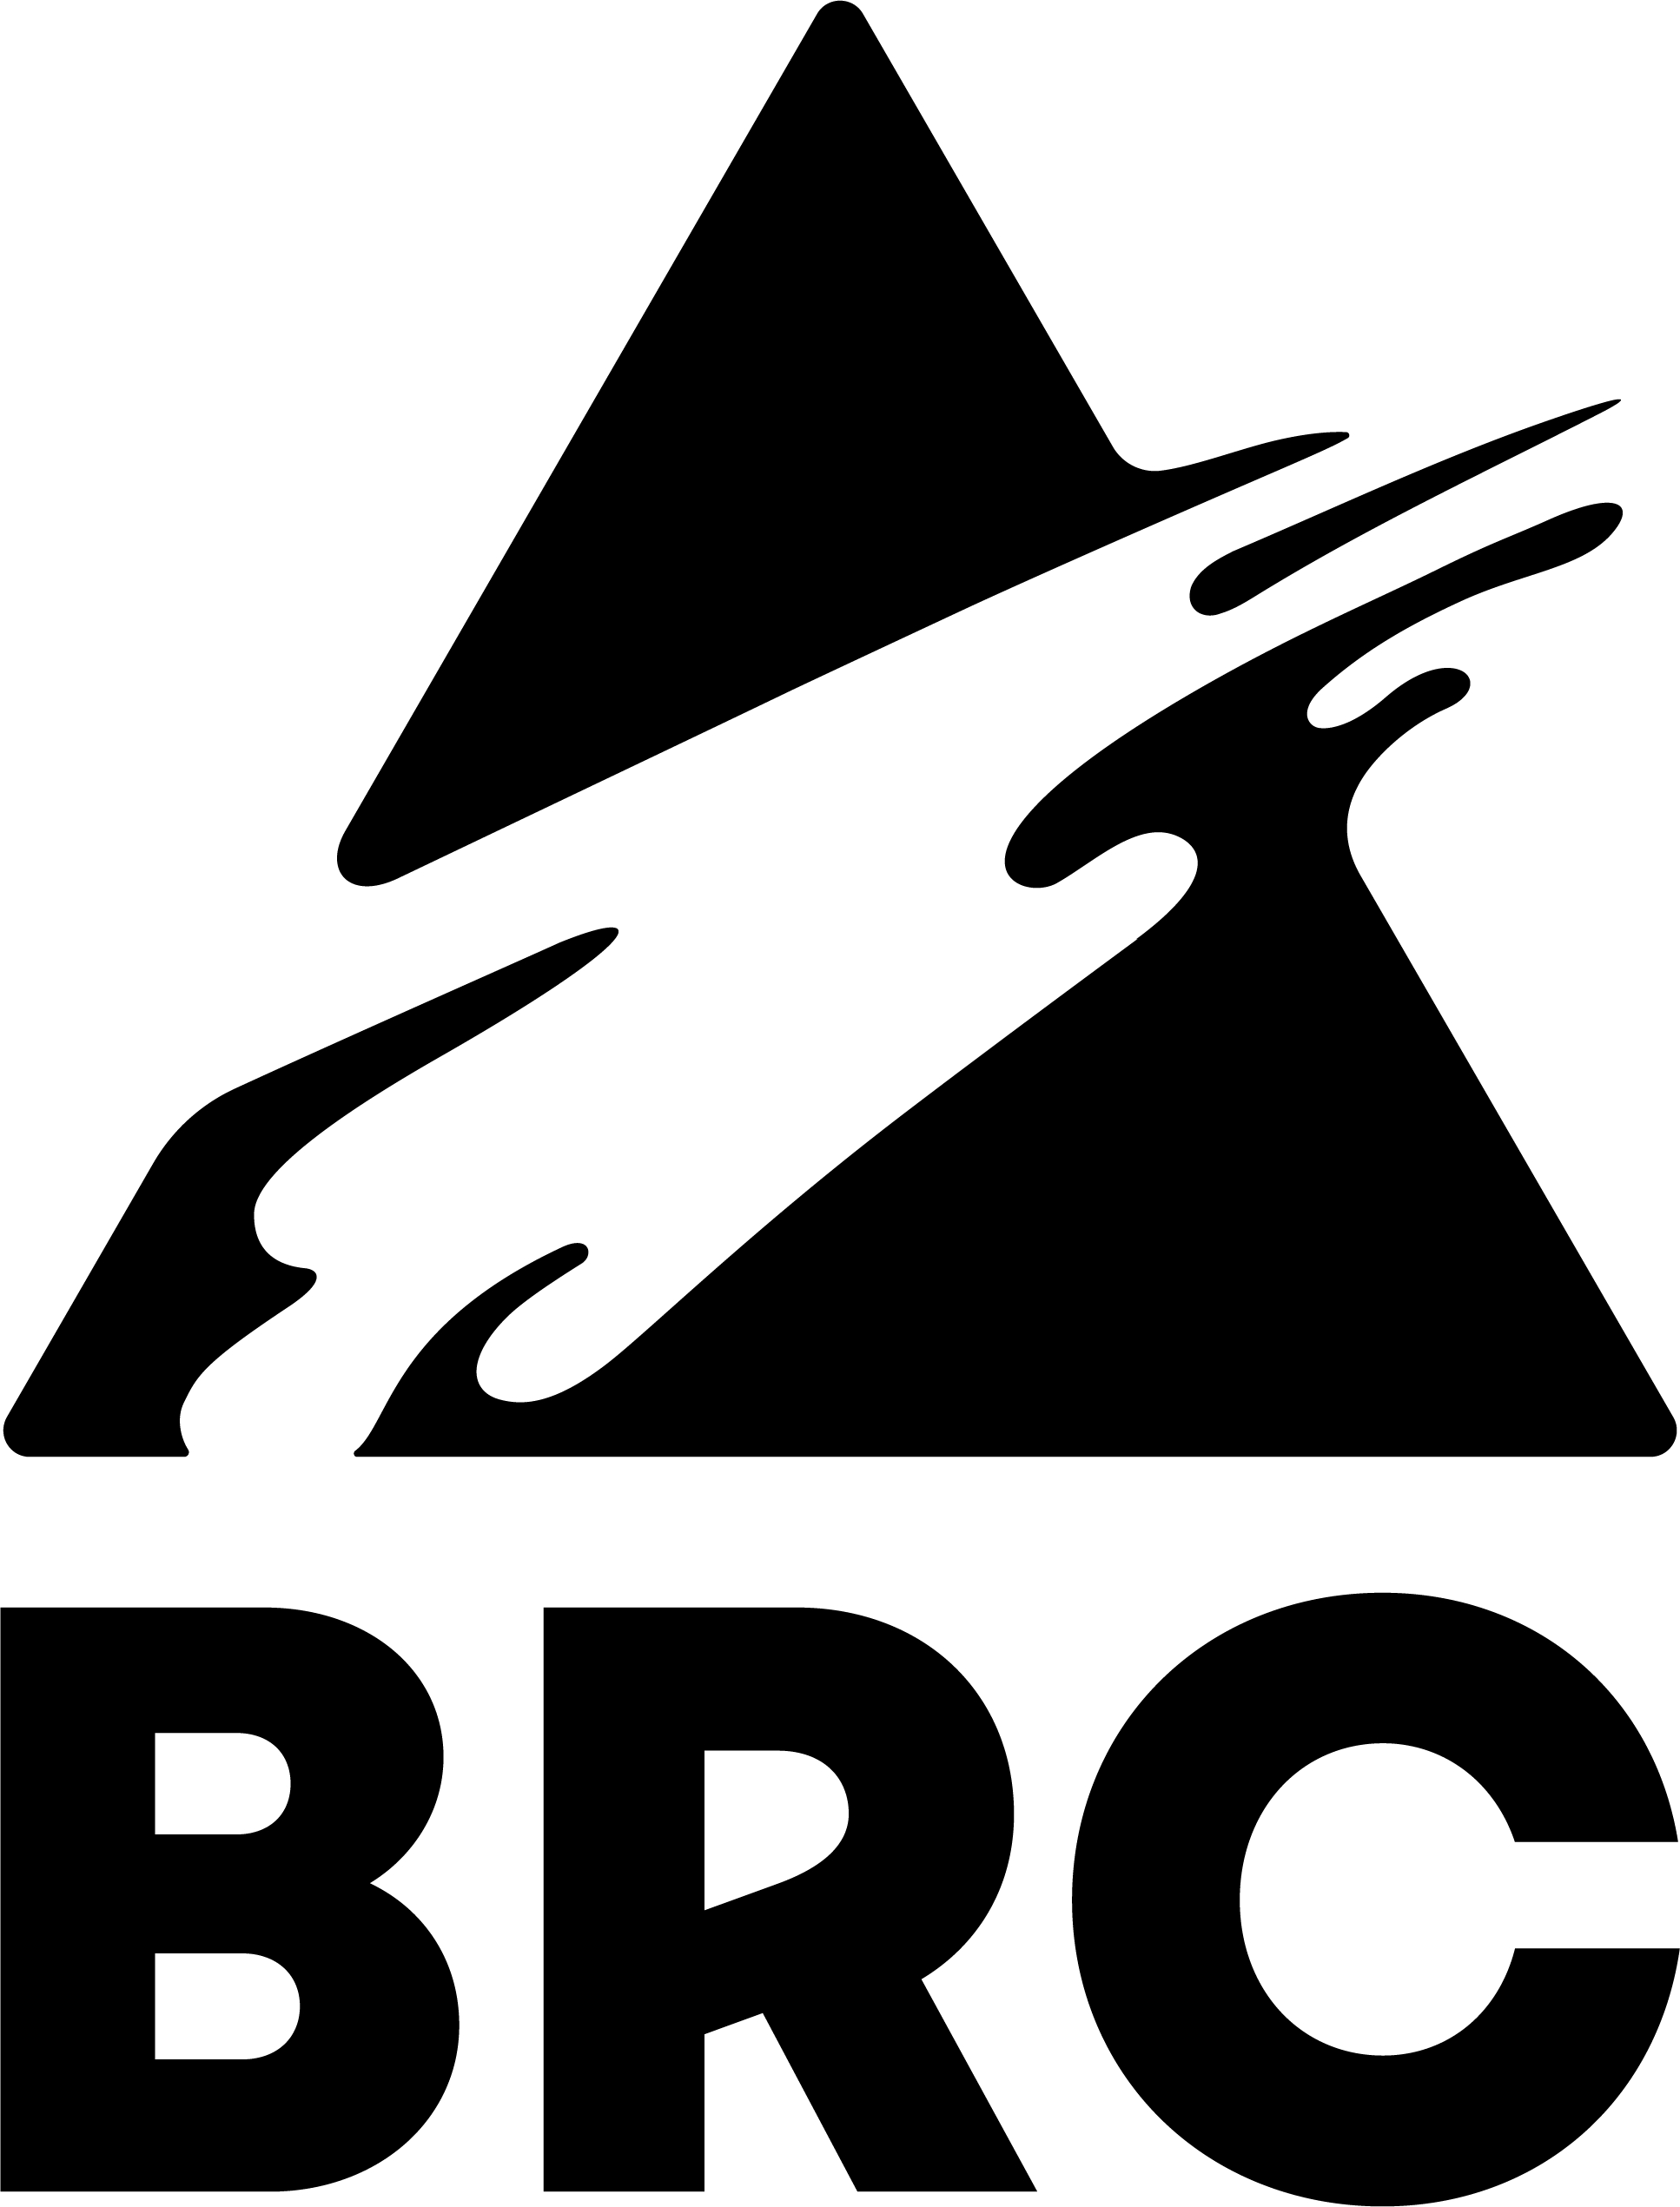 Transparent brc logo Vectors & Illustrations for Free Download | Freepik